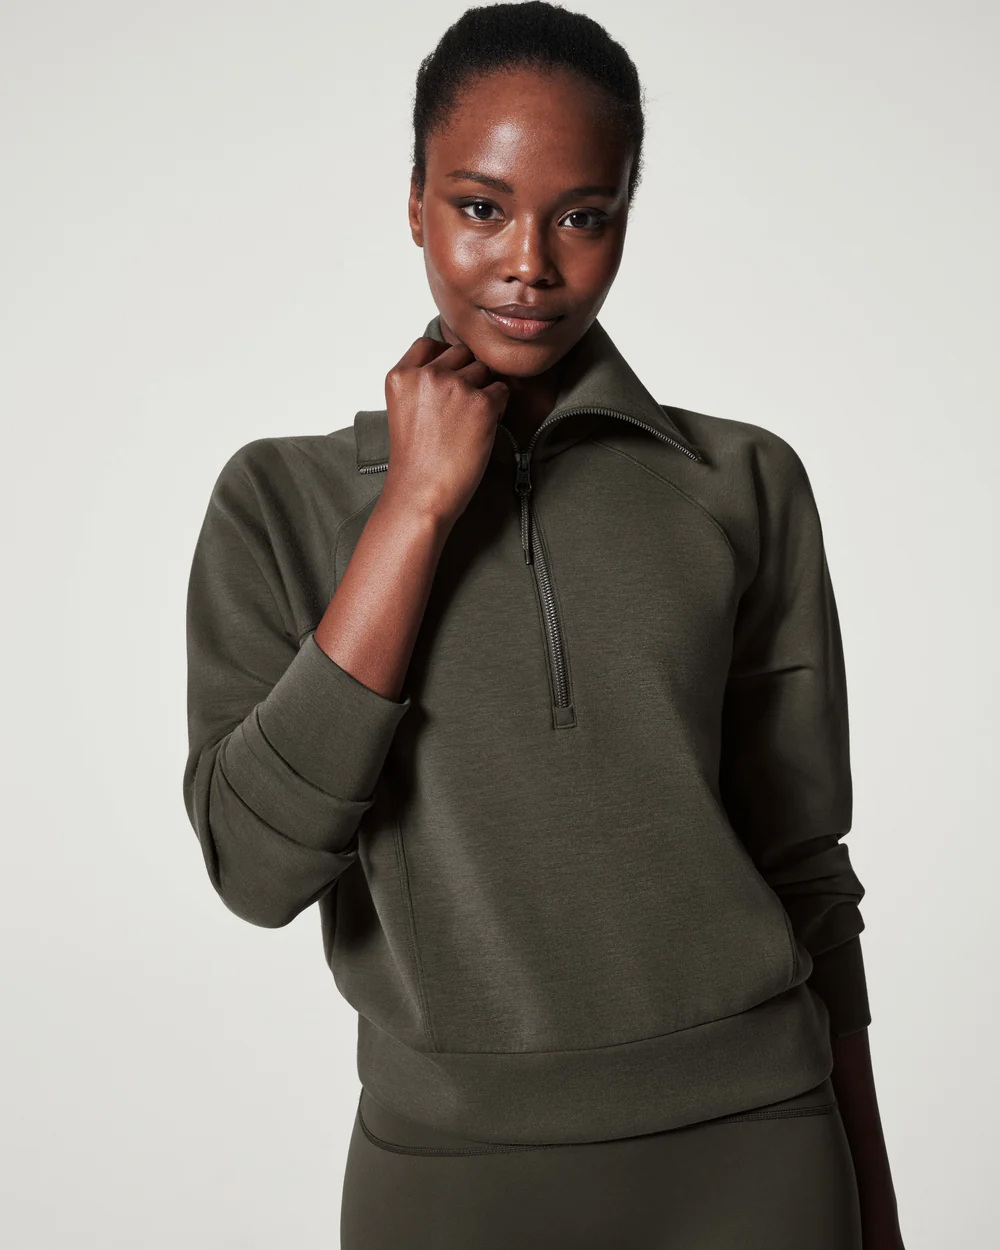 A model in a half zip sweatshirt